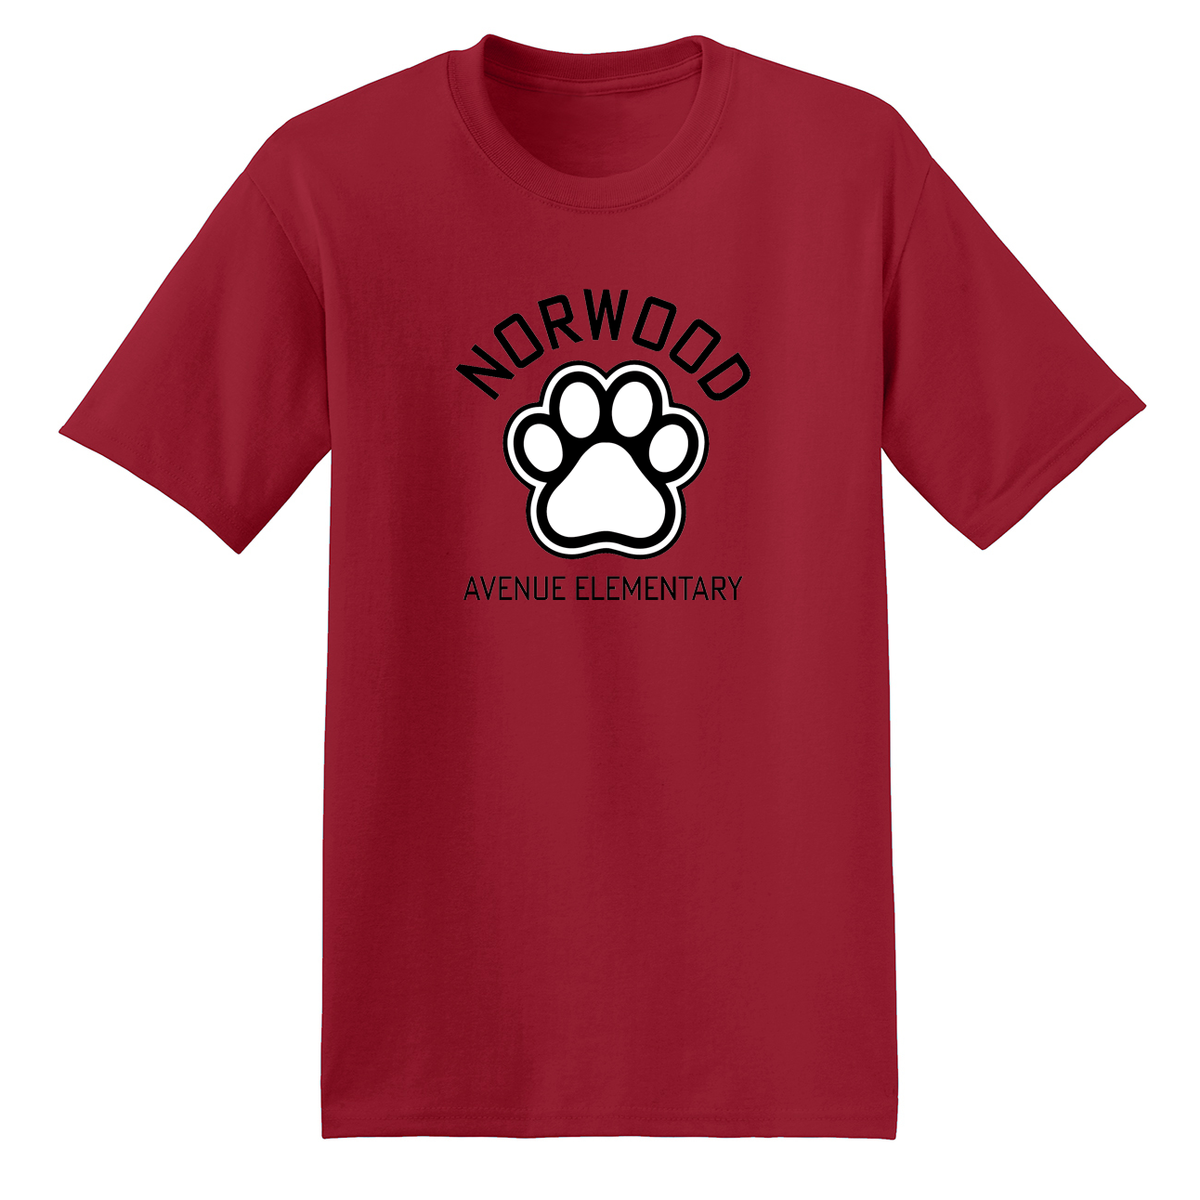 Norwood Ave. Elementary School T-Shirt